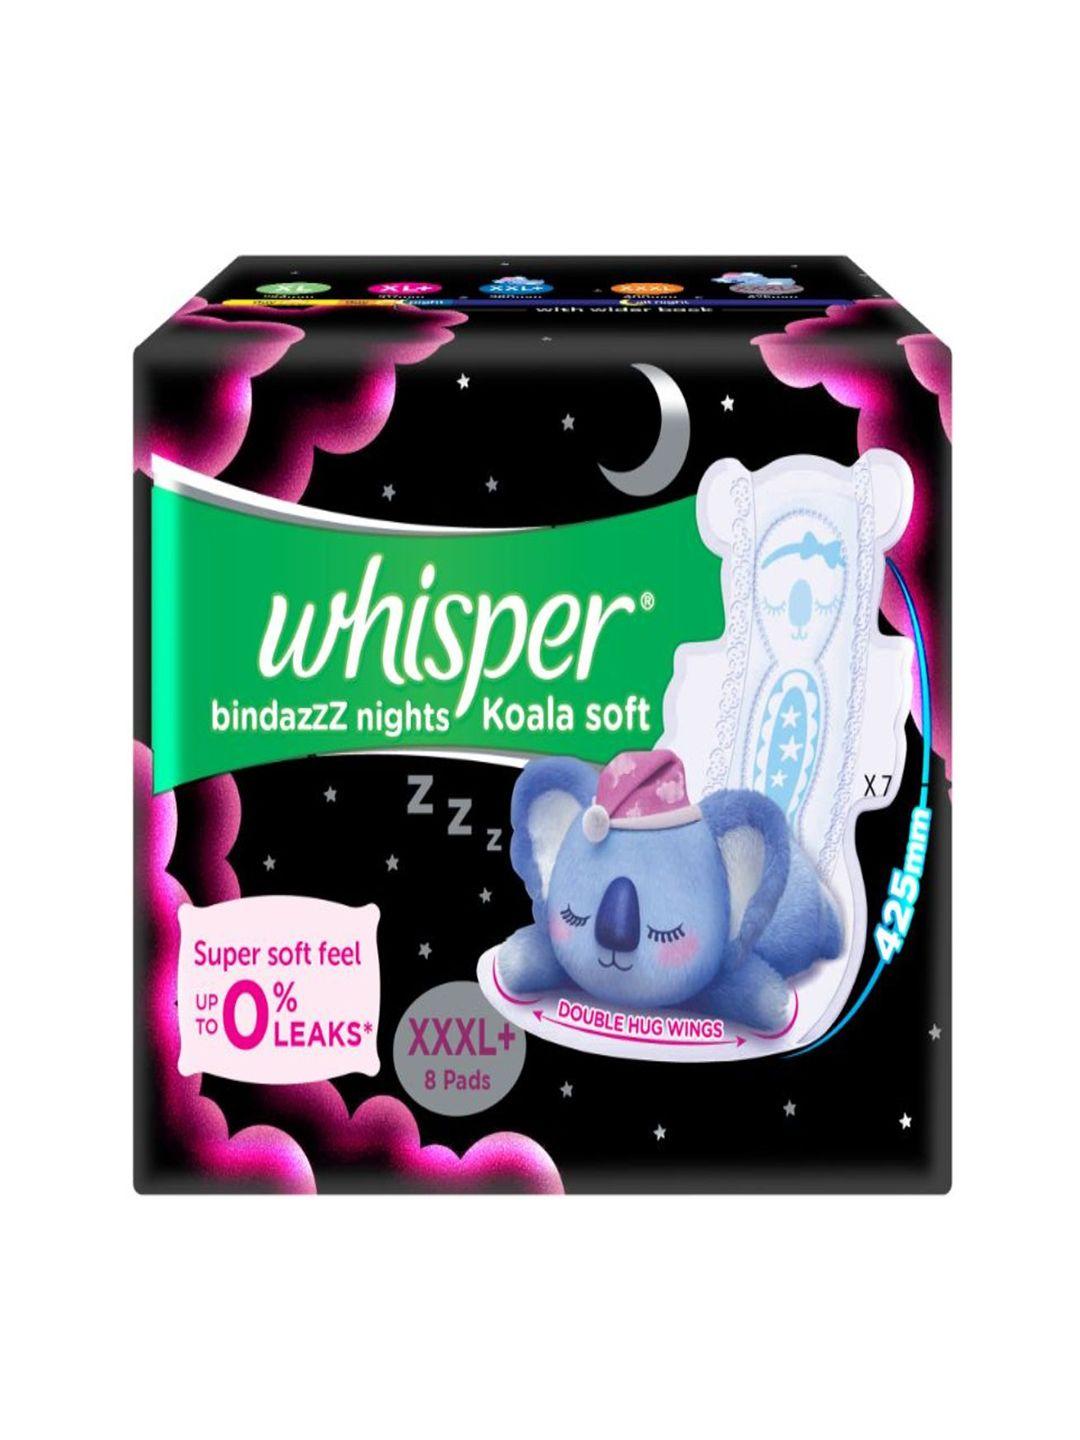 whisper bindazzz nights koala soft xxl+ sanitary pads - 8 pads